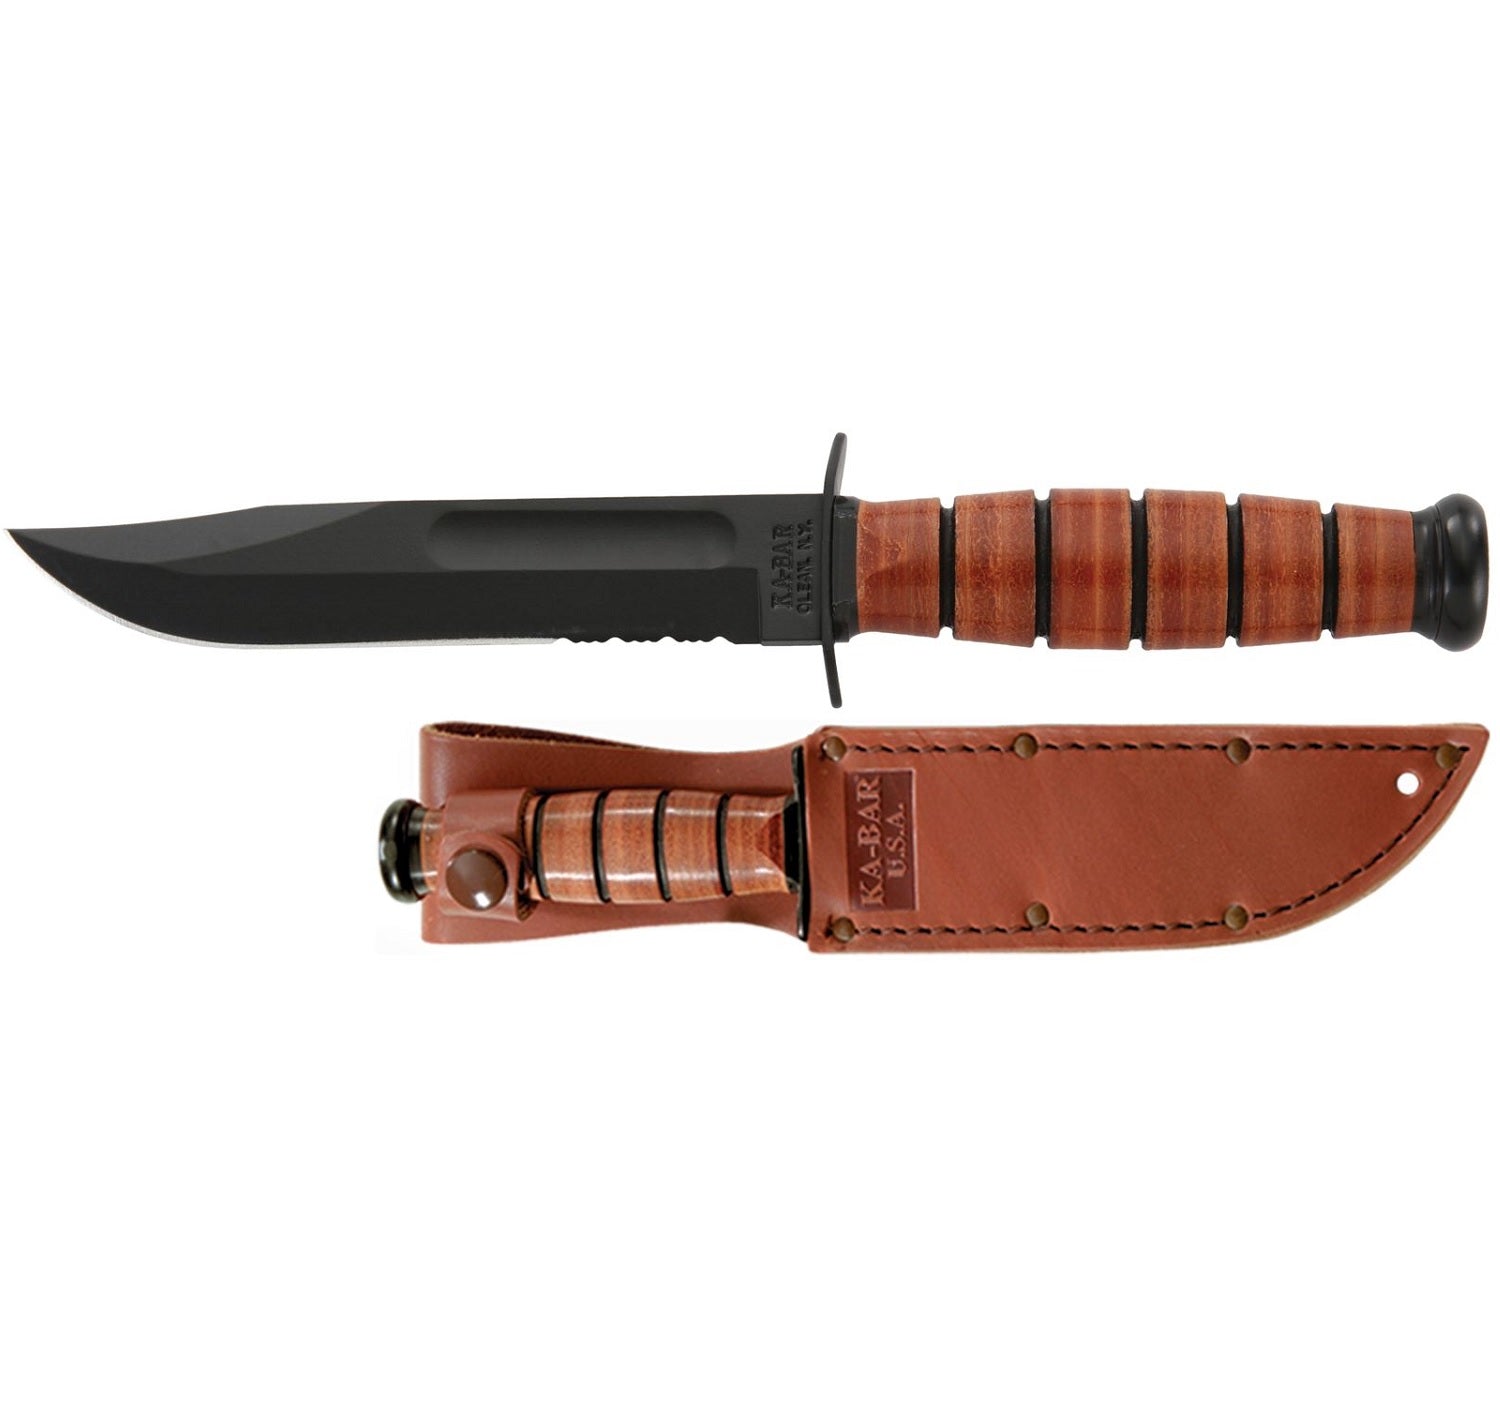 KA-BAR Short Fixed 5.25 in Black Combo Blade Leather Handle